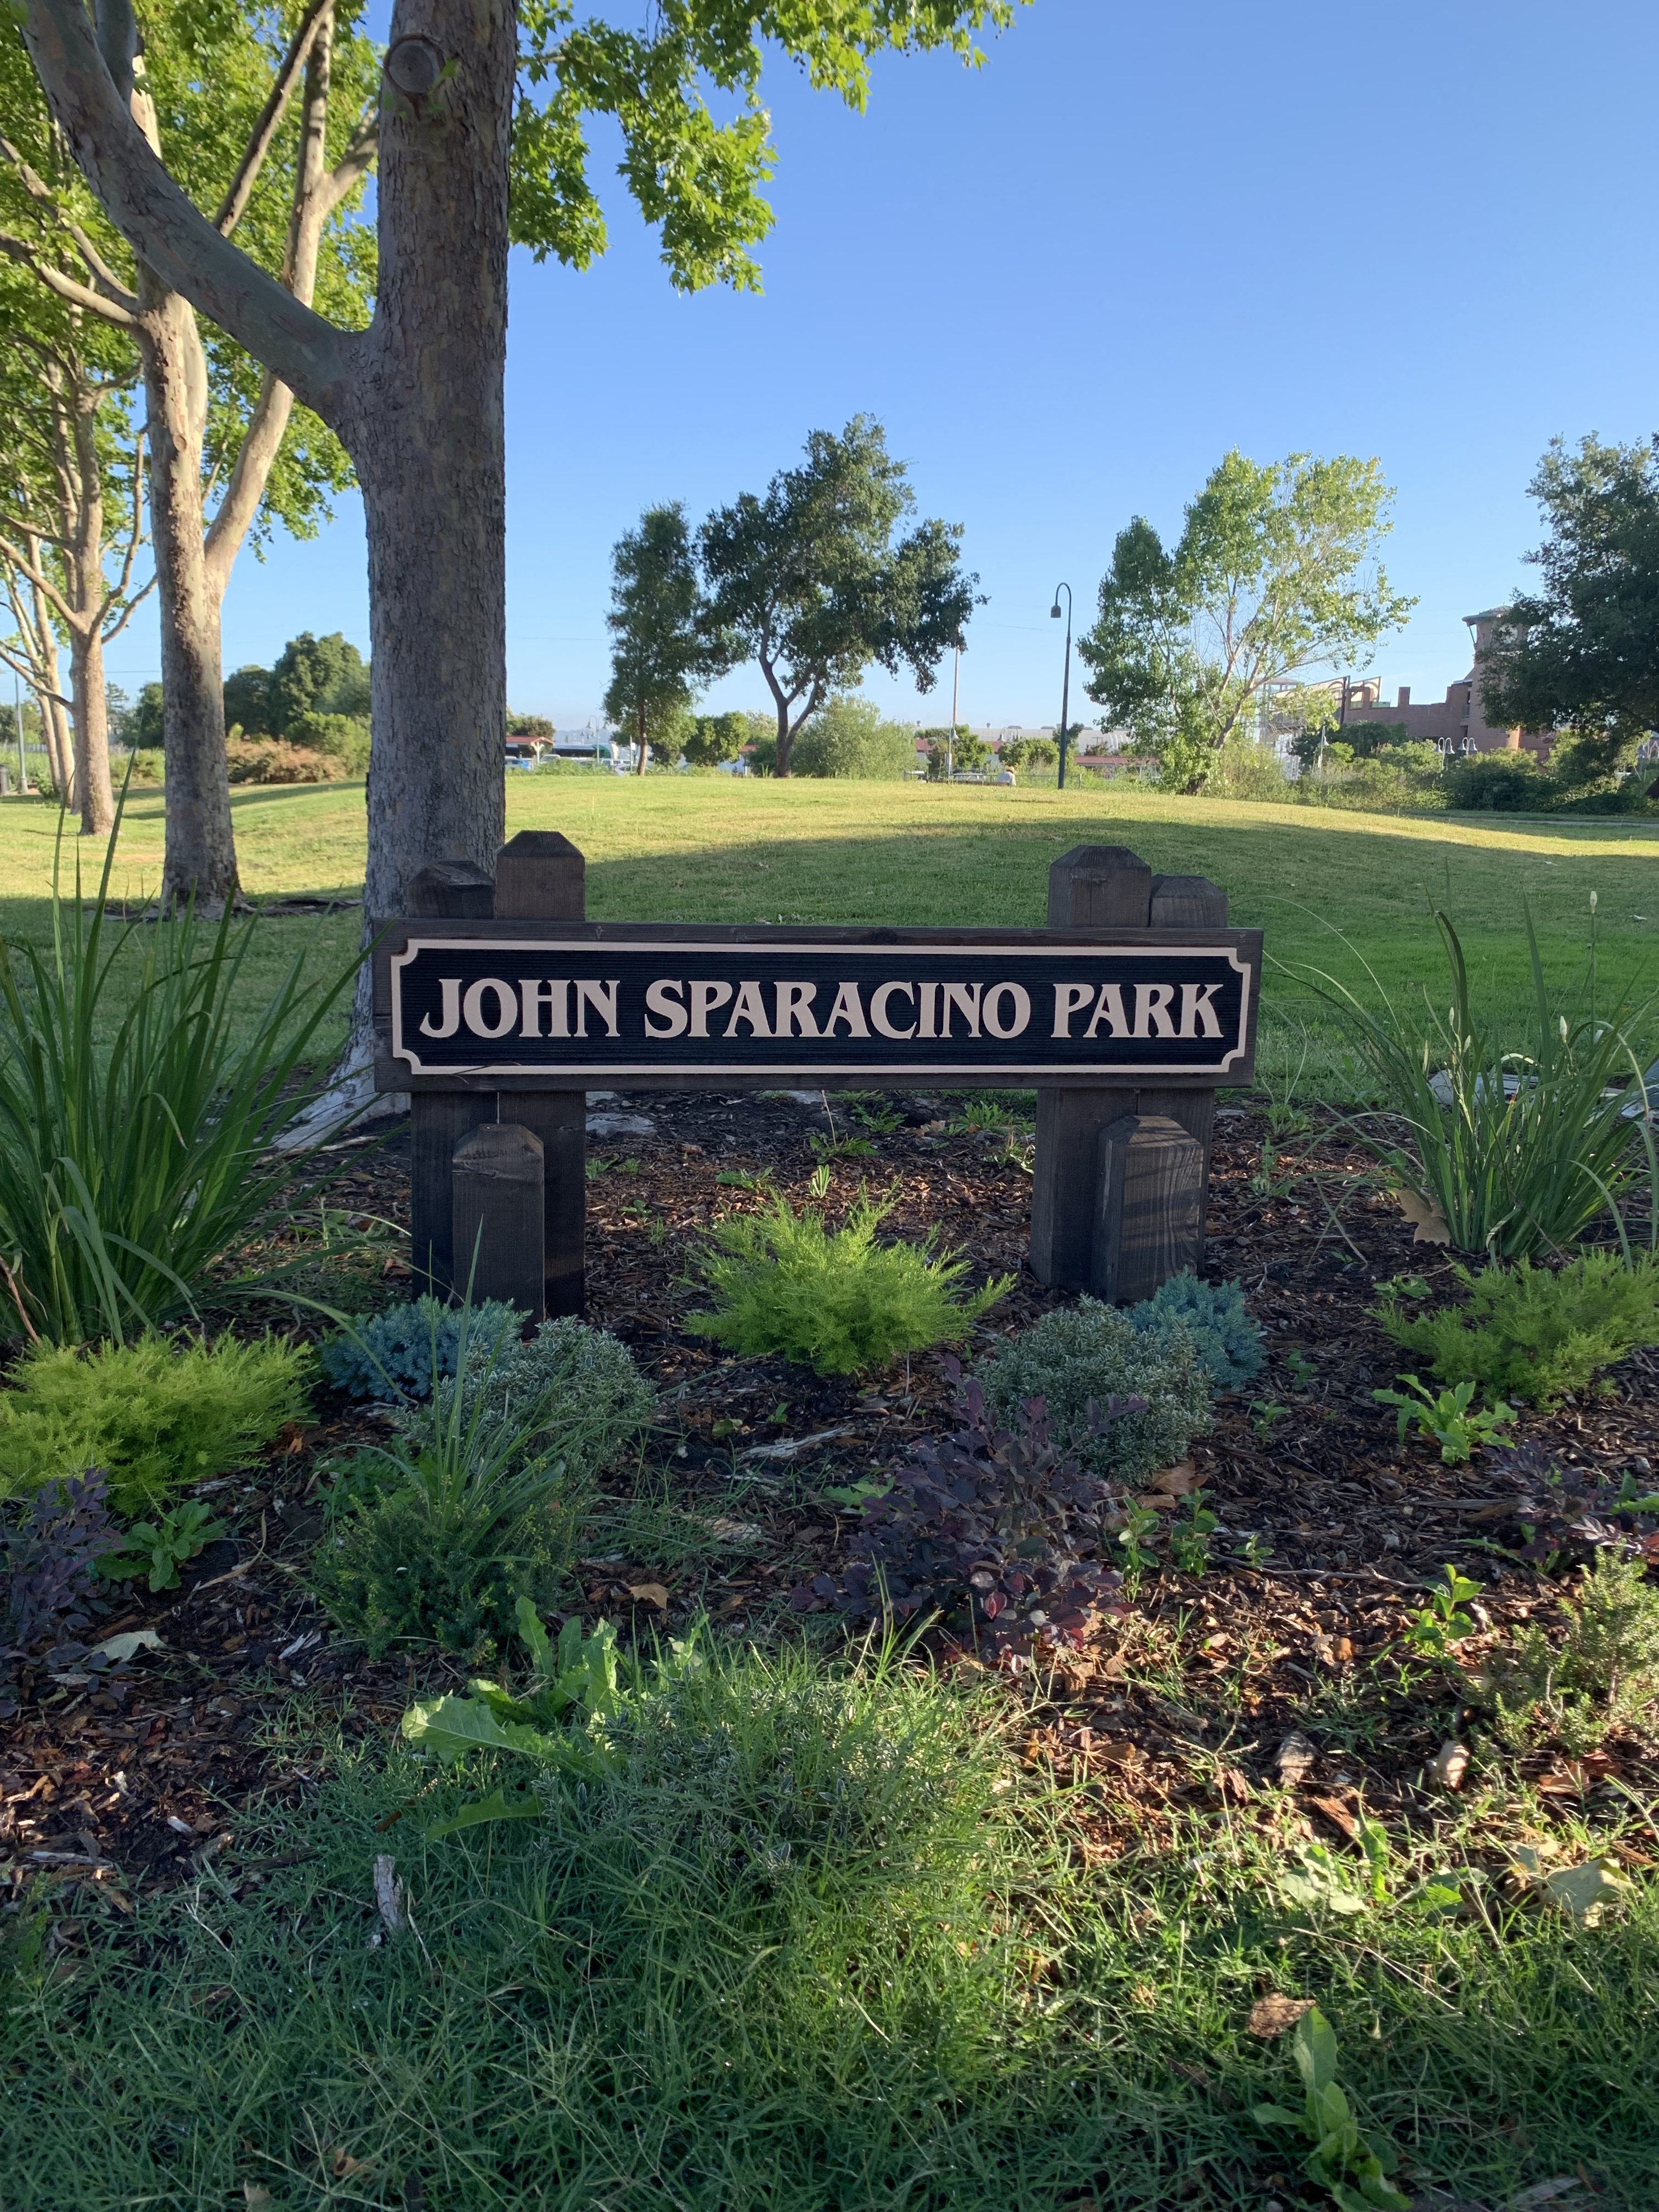 John Sparacino Park & Community Transit Center